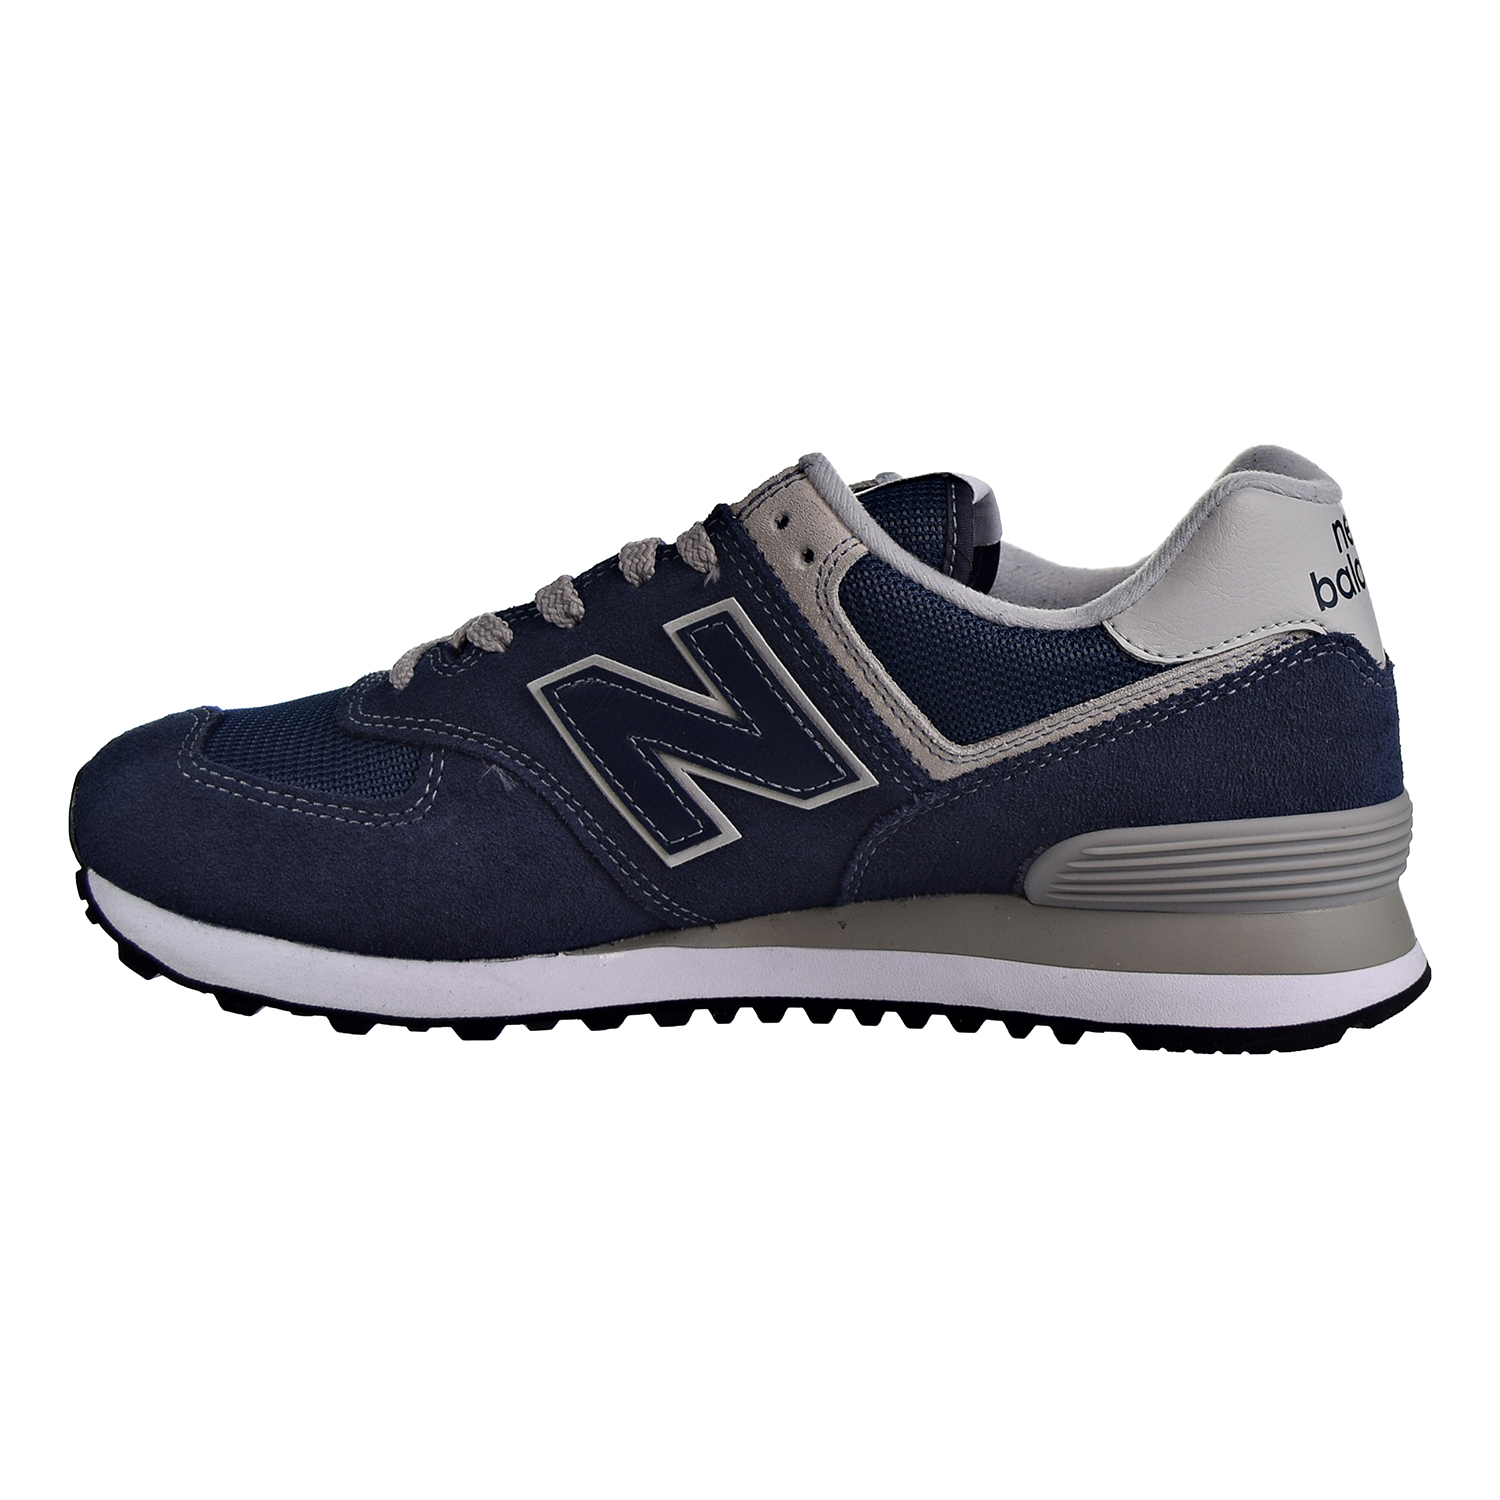 New Balance 574 Men's Shoes Navy/Grey ml574-egn